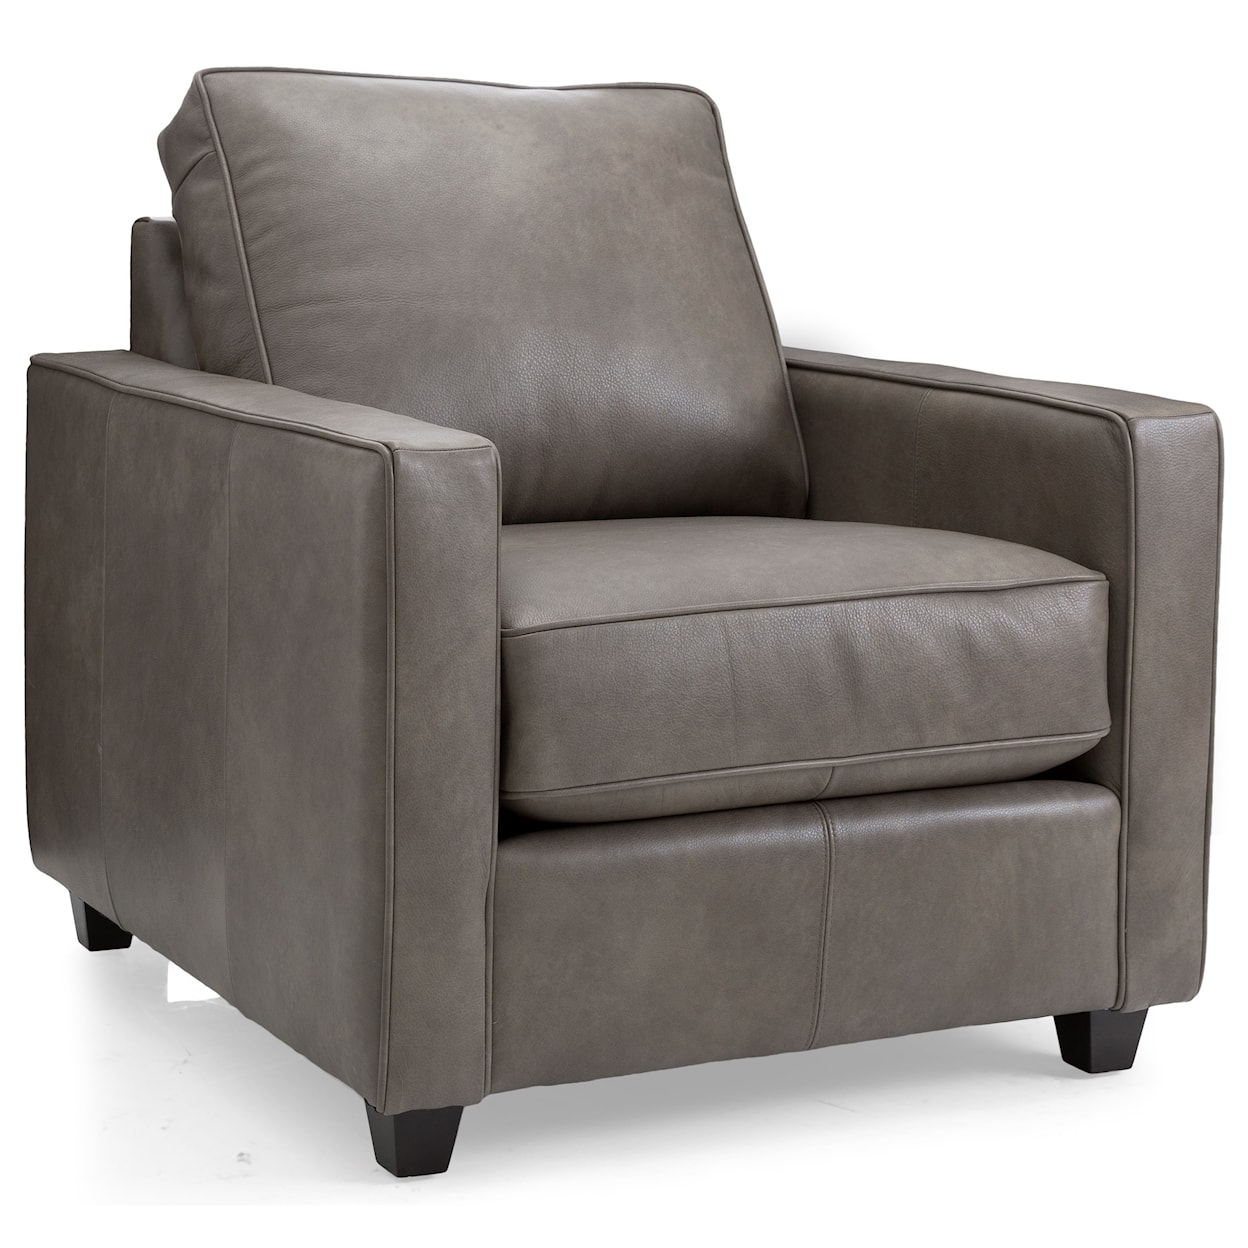 Decor-Rest 2855 Upholstered Chair